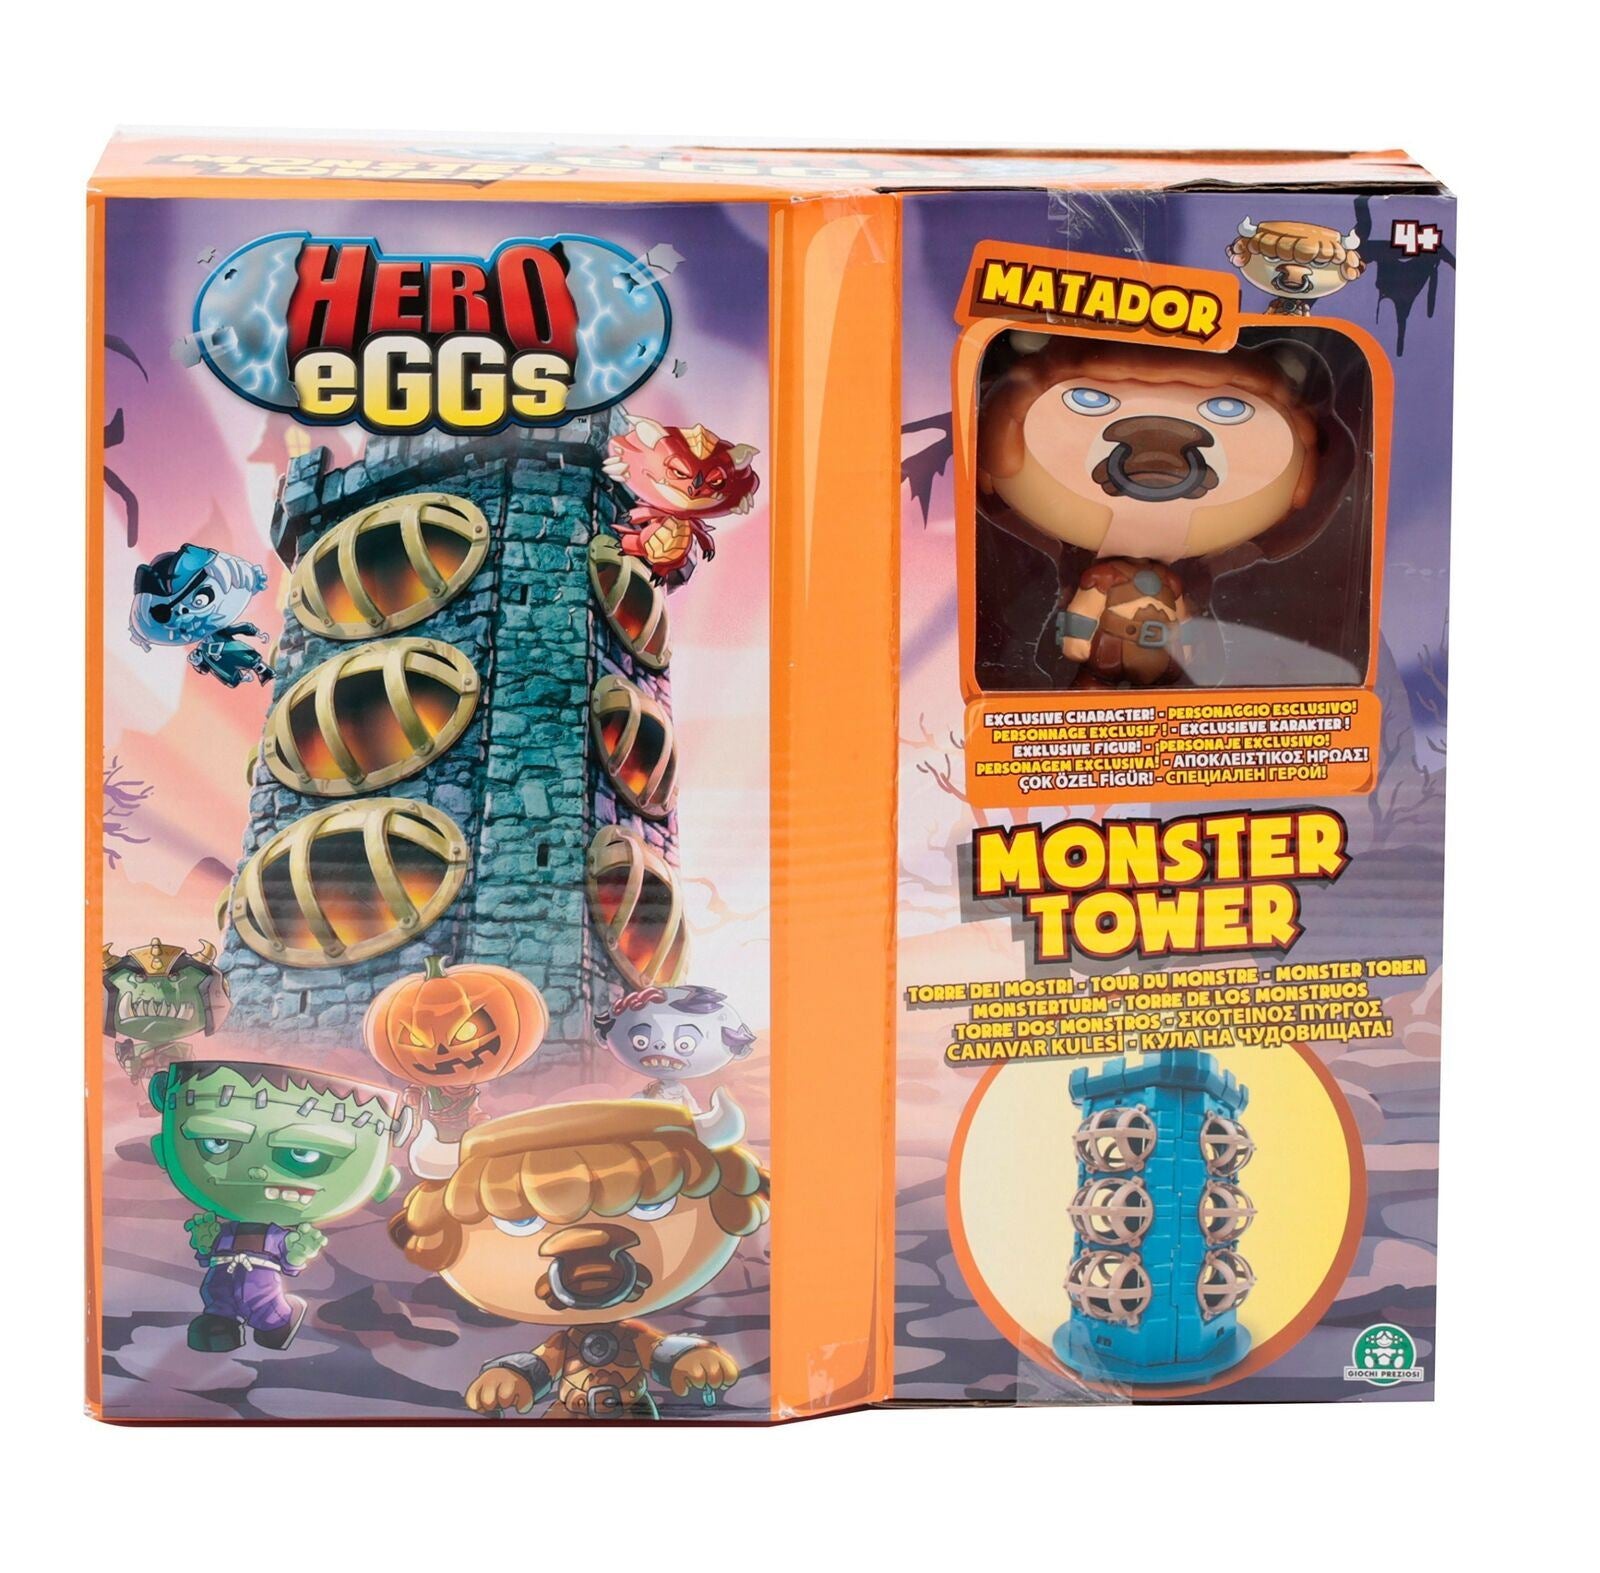 Mega Headz MONSTERS TOWER Hero Eggs Playset with EXCLUSIVE Matador Figure